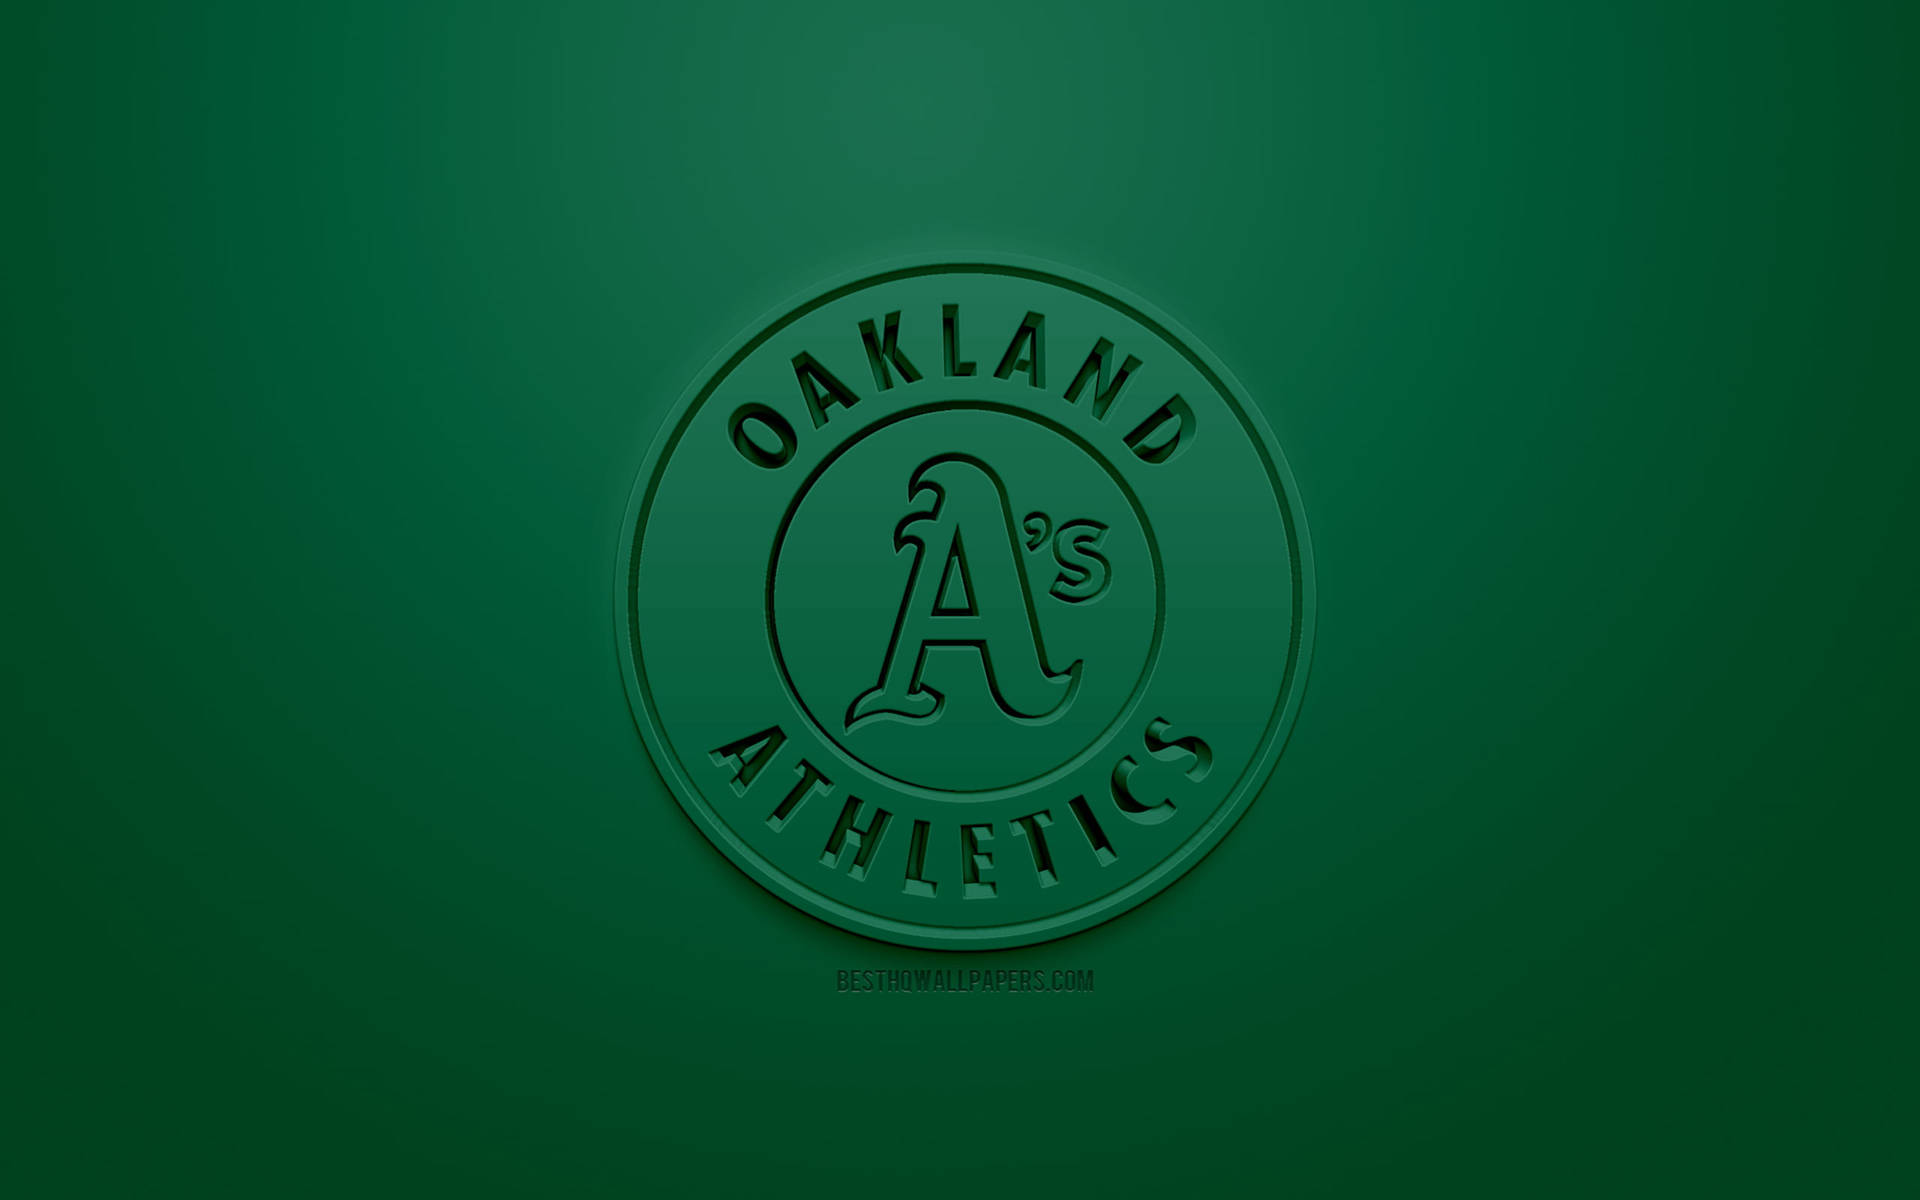 Oakland Athletics Green Monochrome Wallpaper